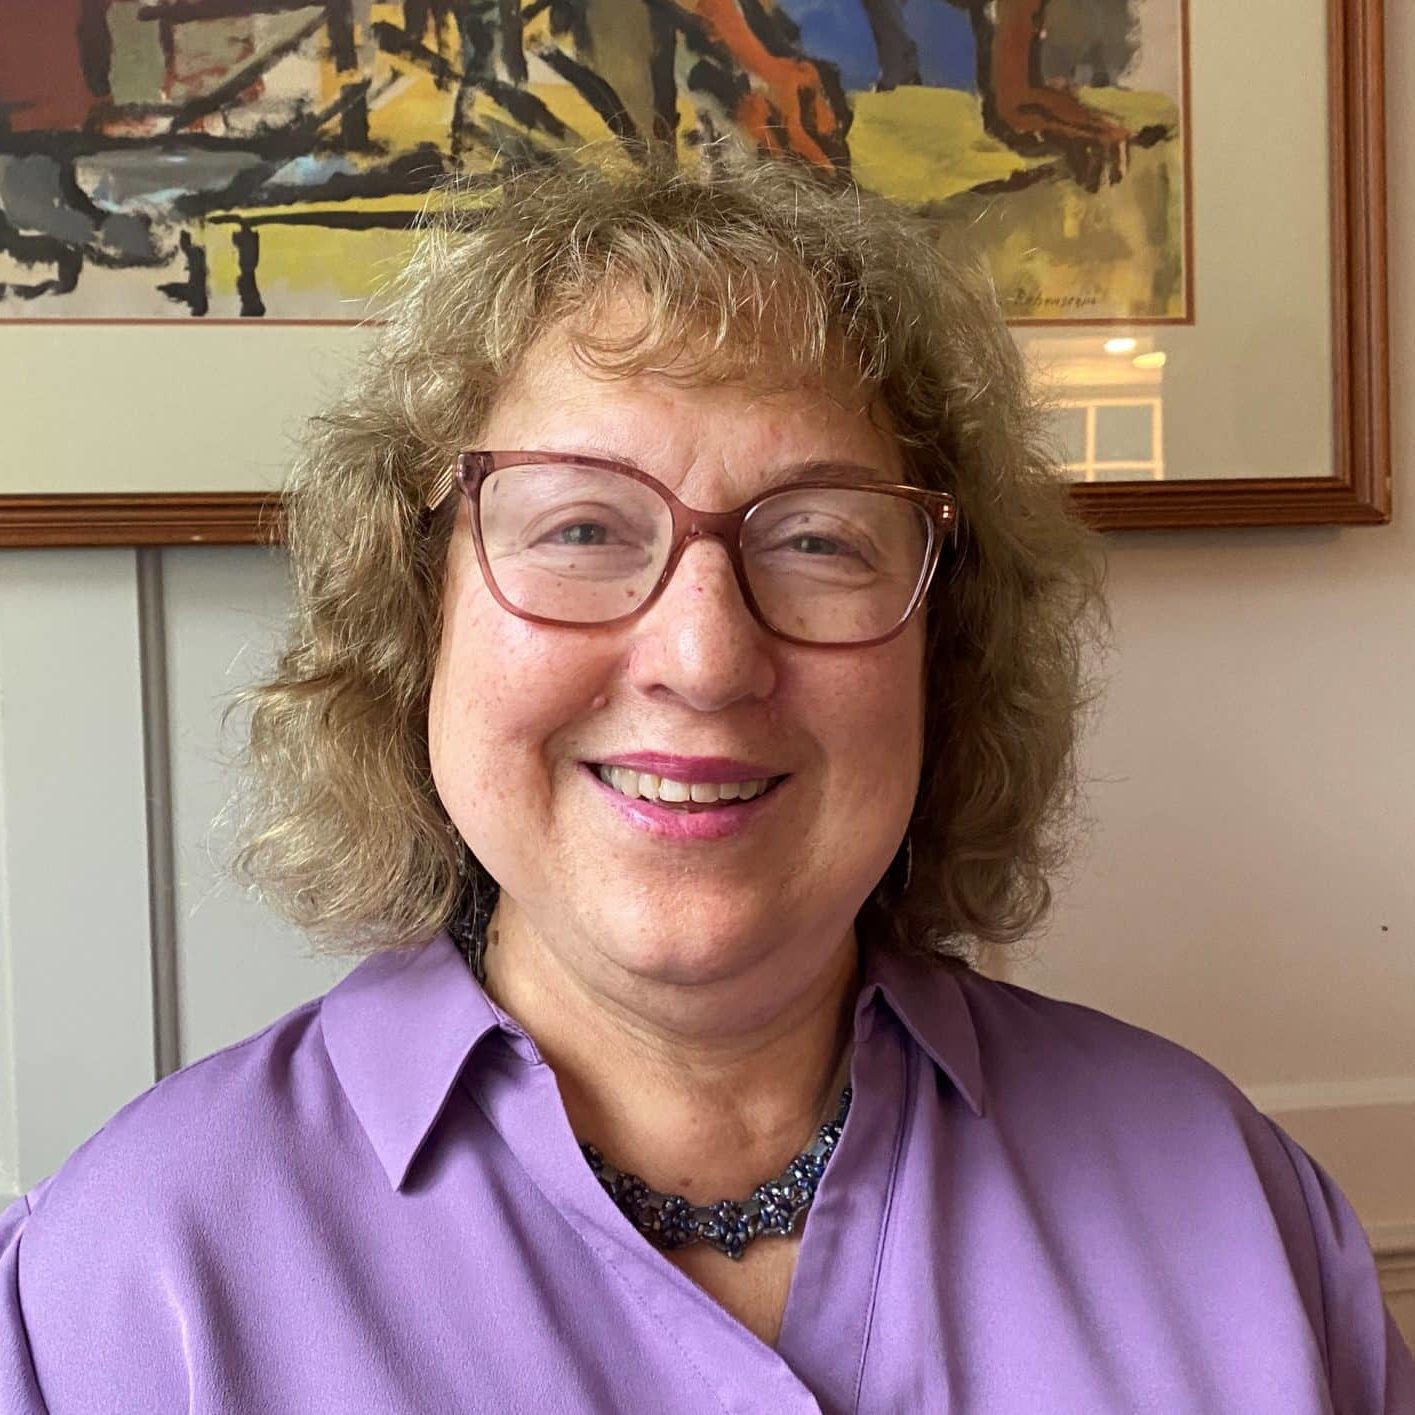 Nancy Miringoff ALS Greater New York Board member